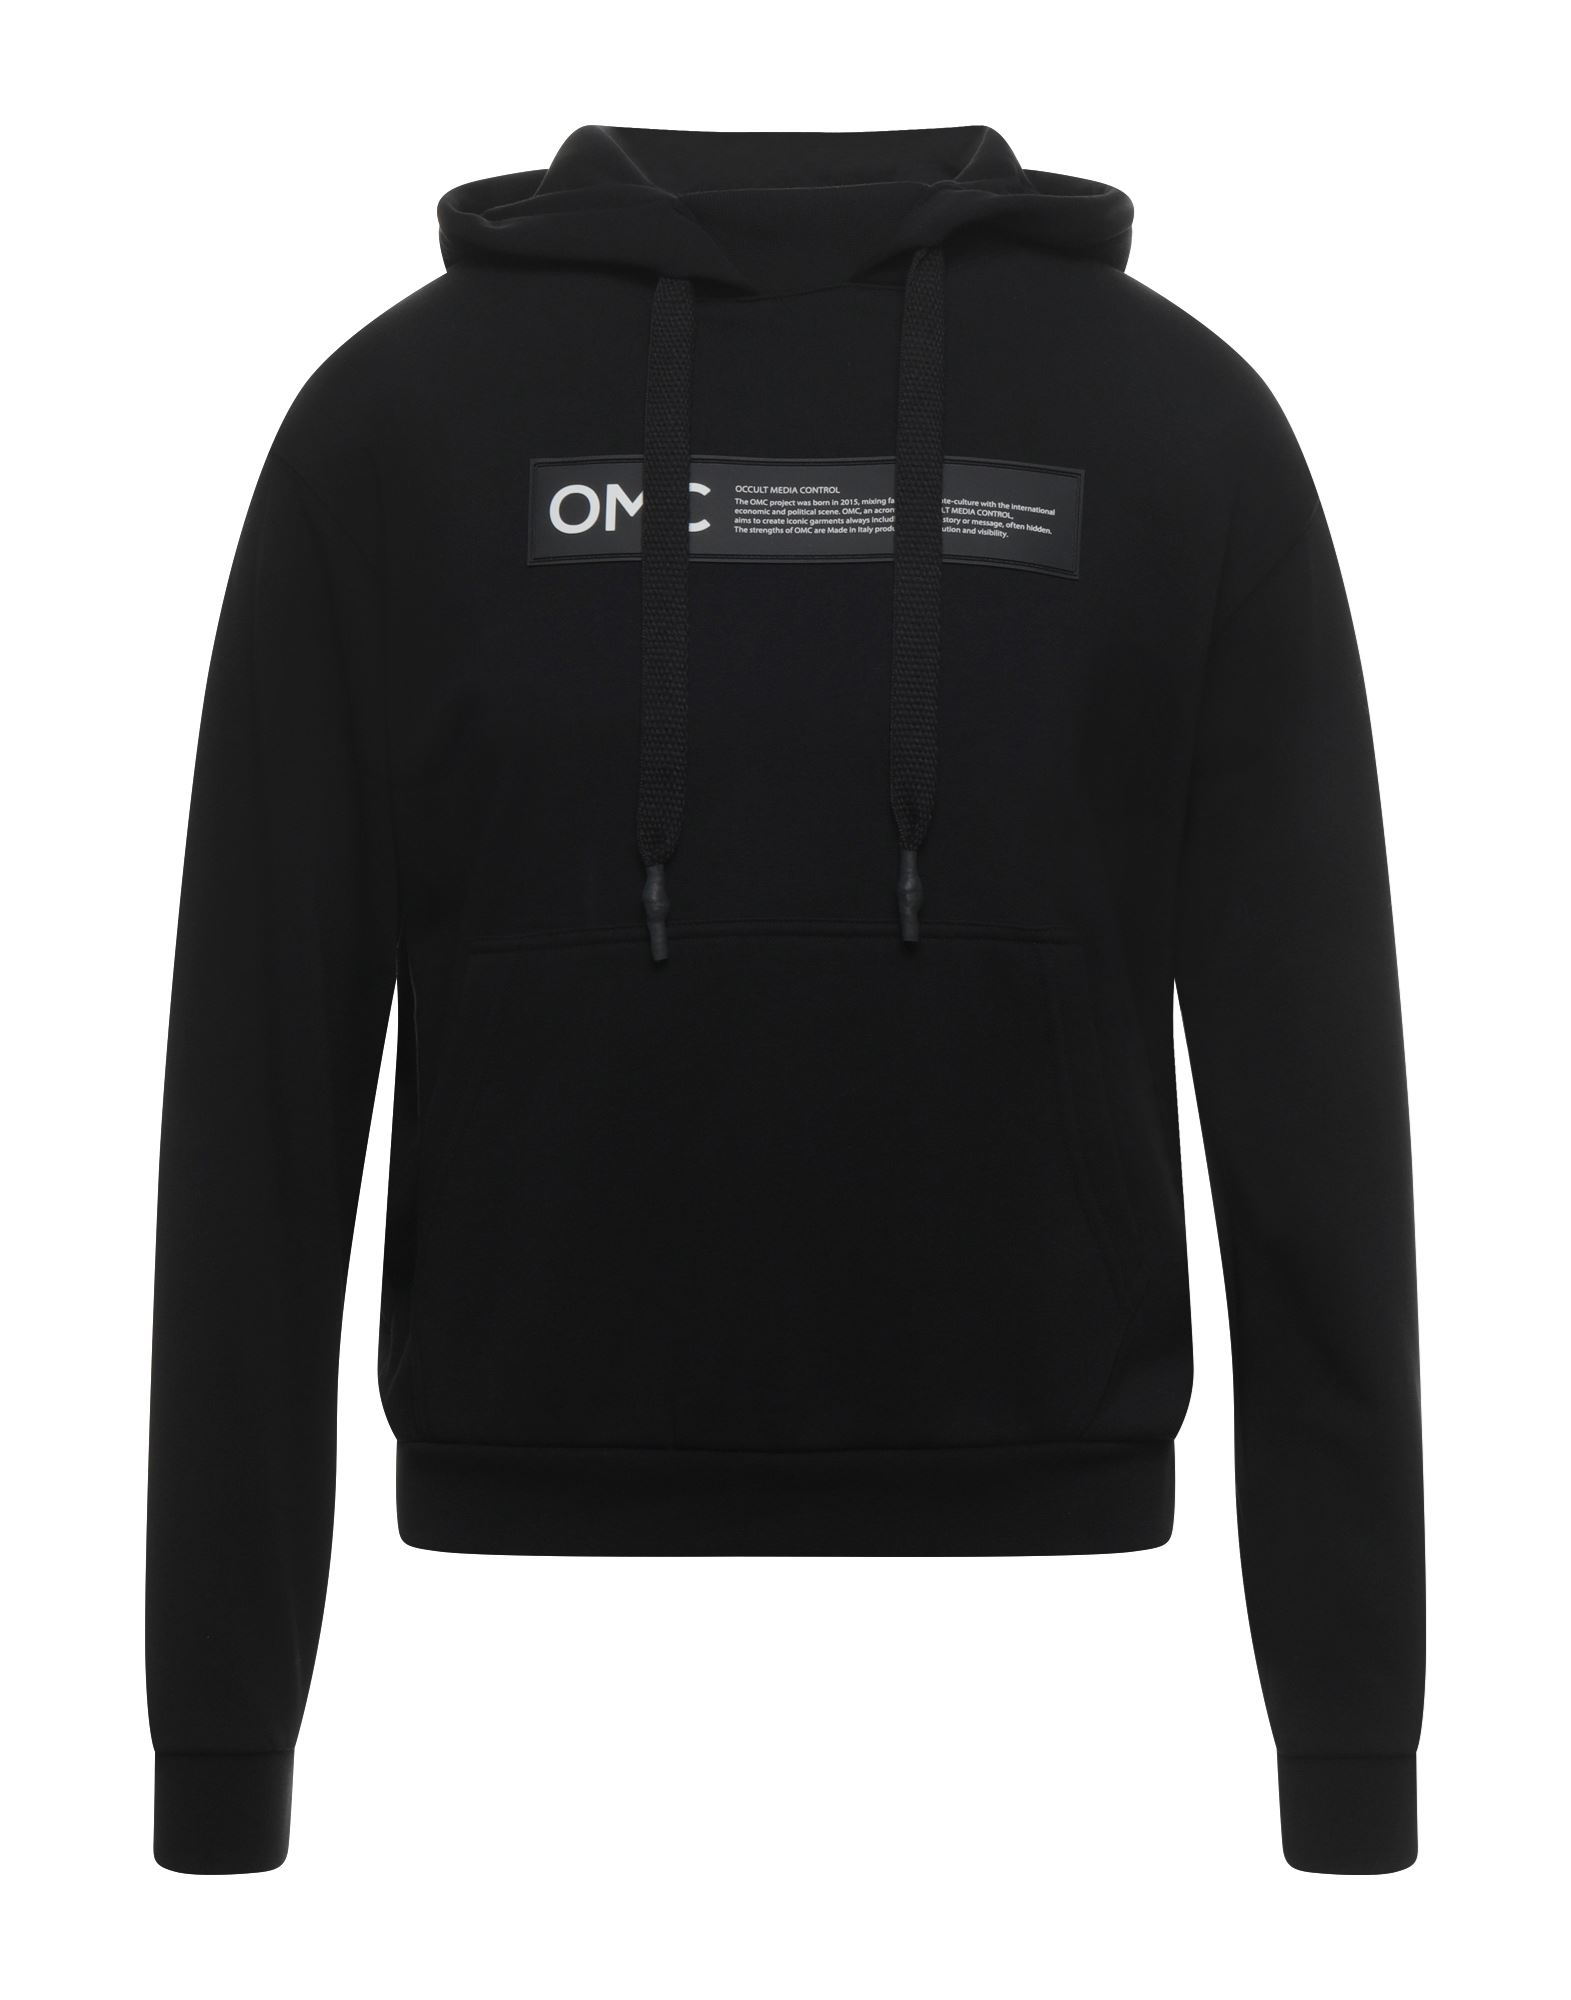 Omc Sweatshirts In Black